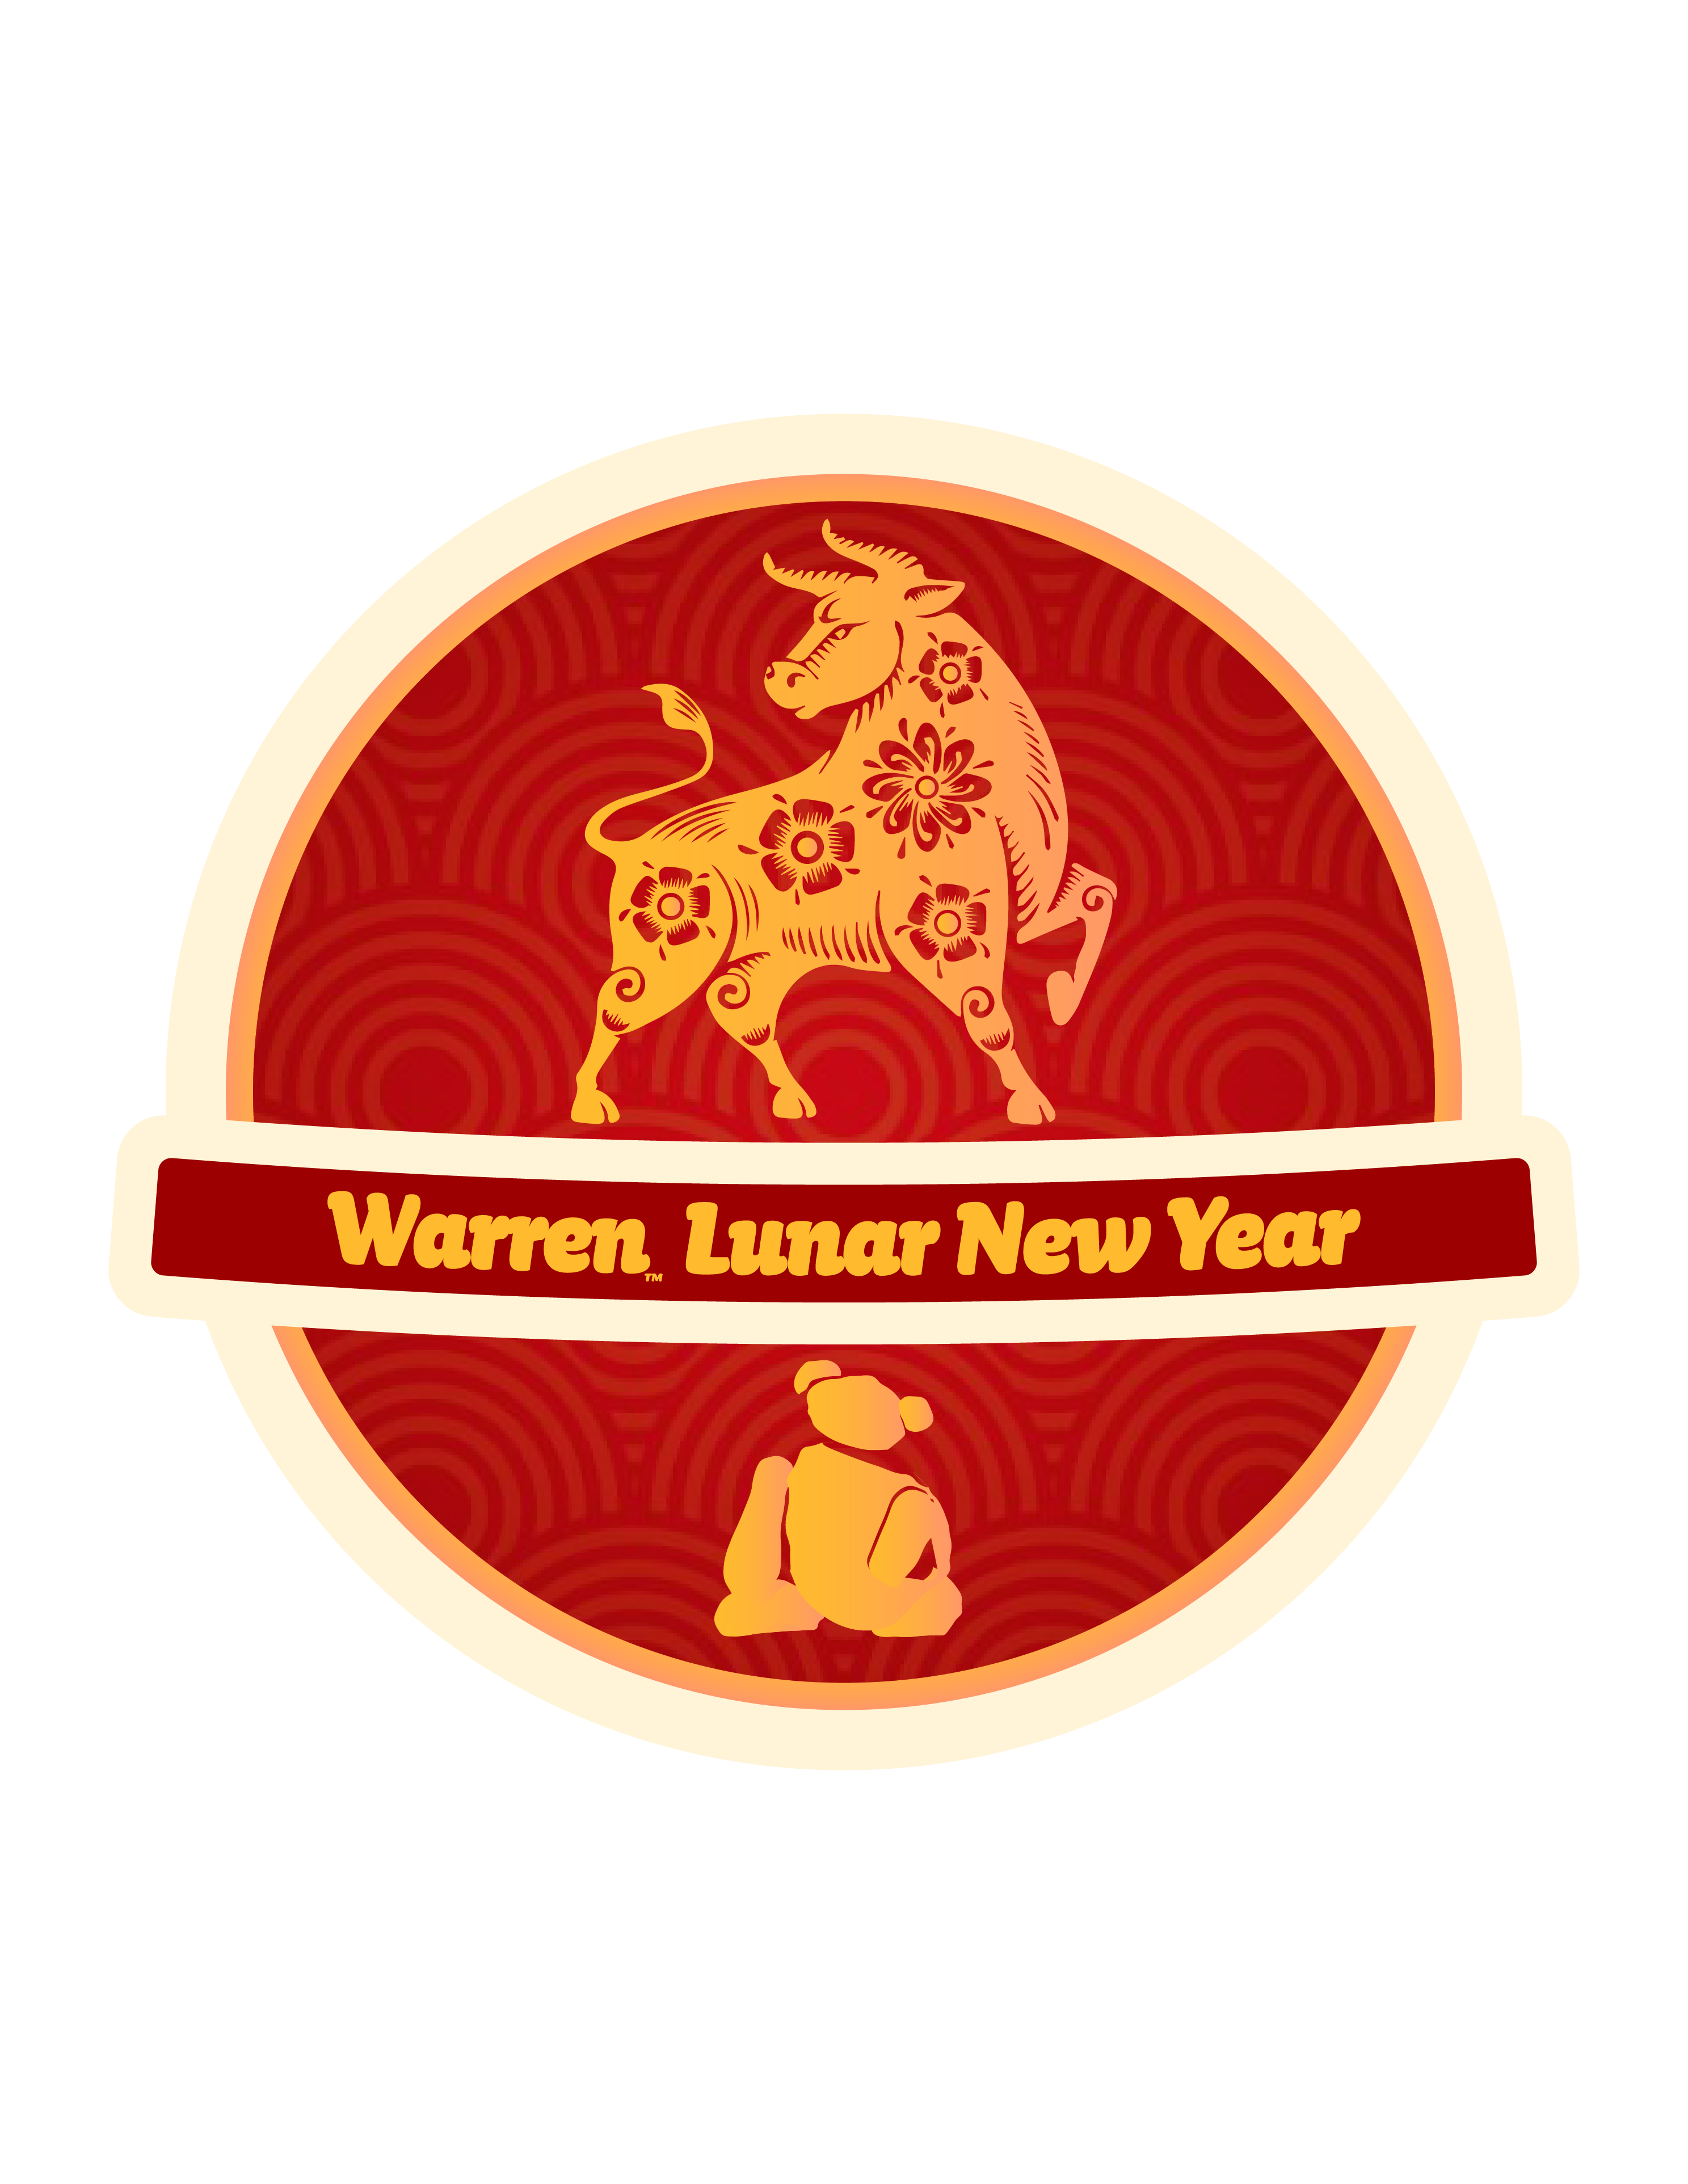 Warren Lunar New Year 2021